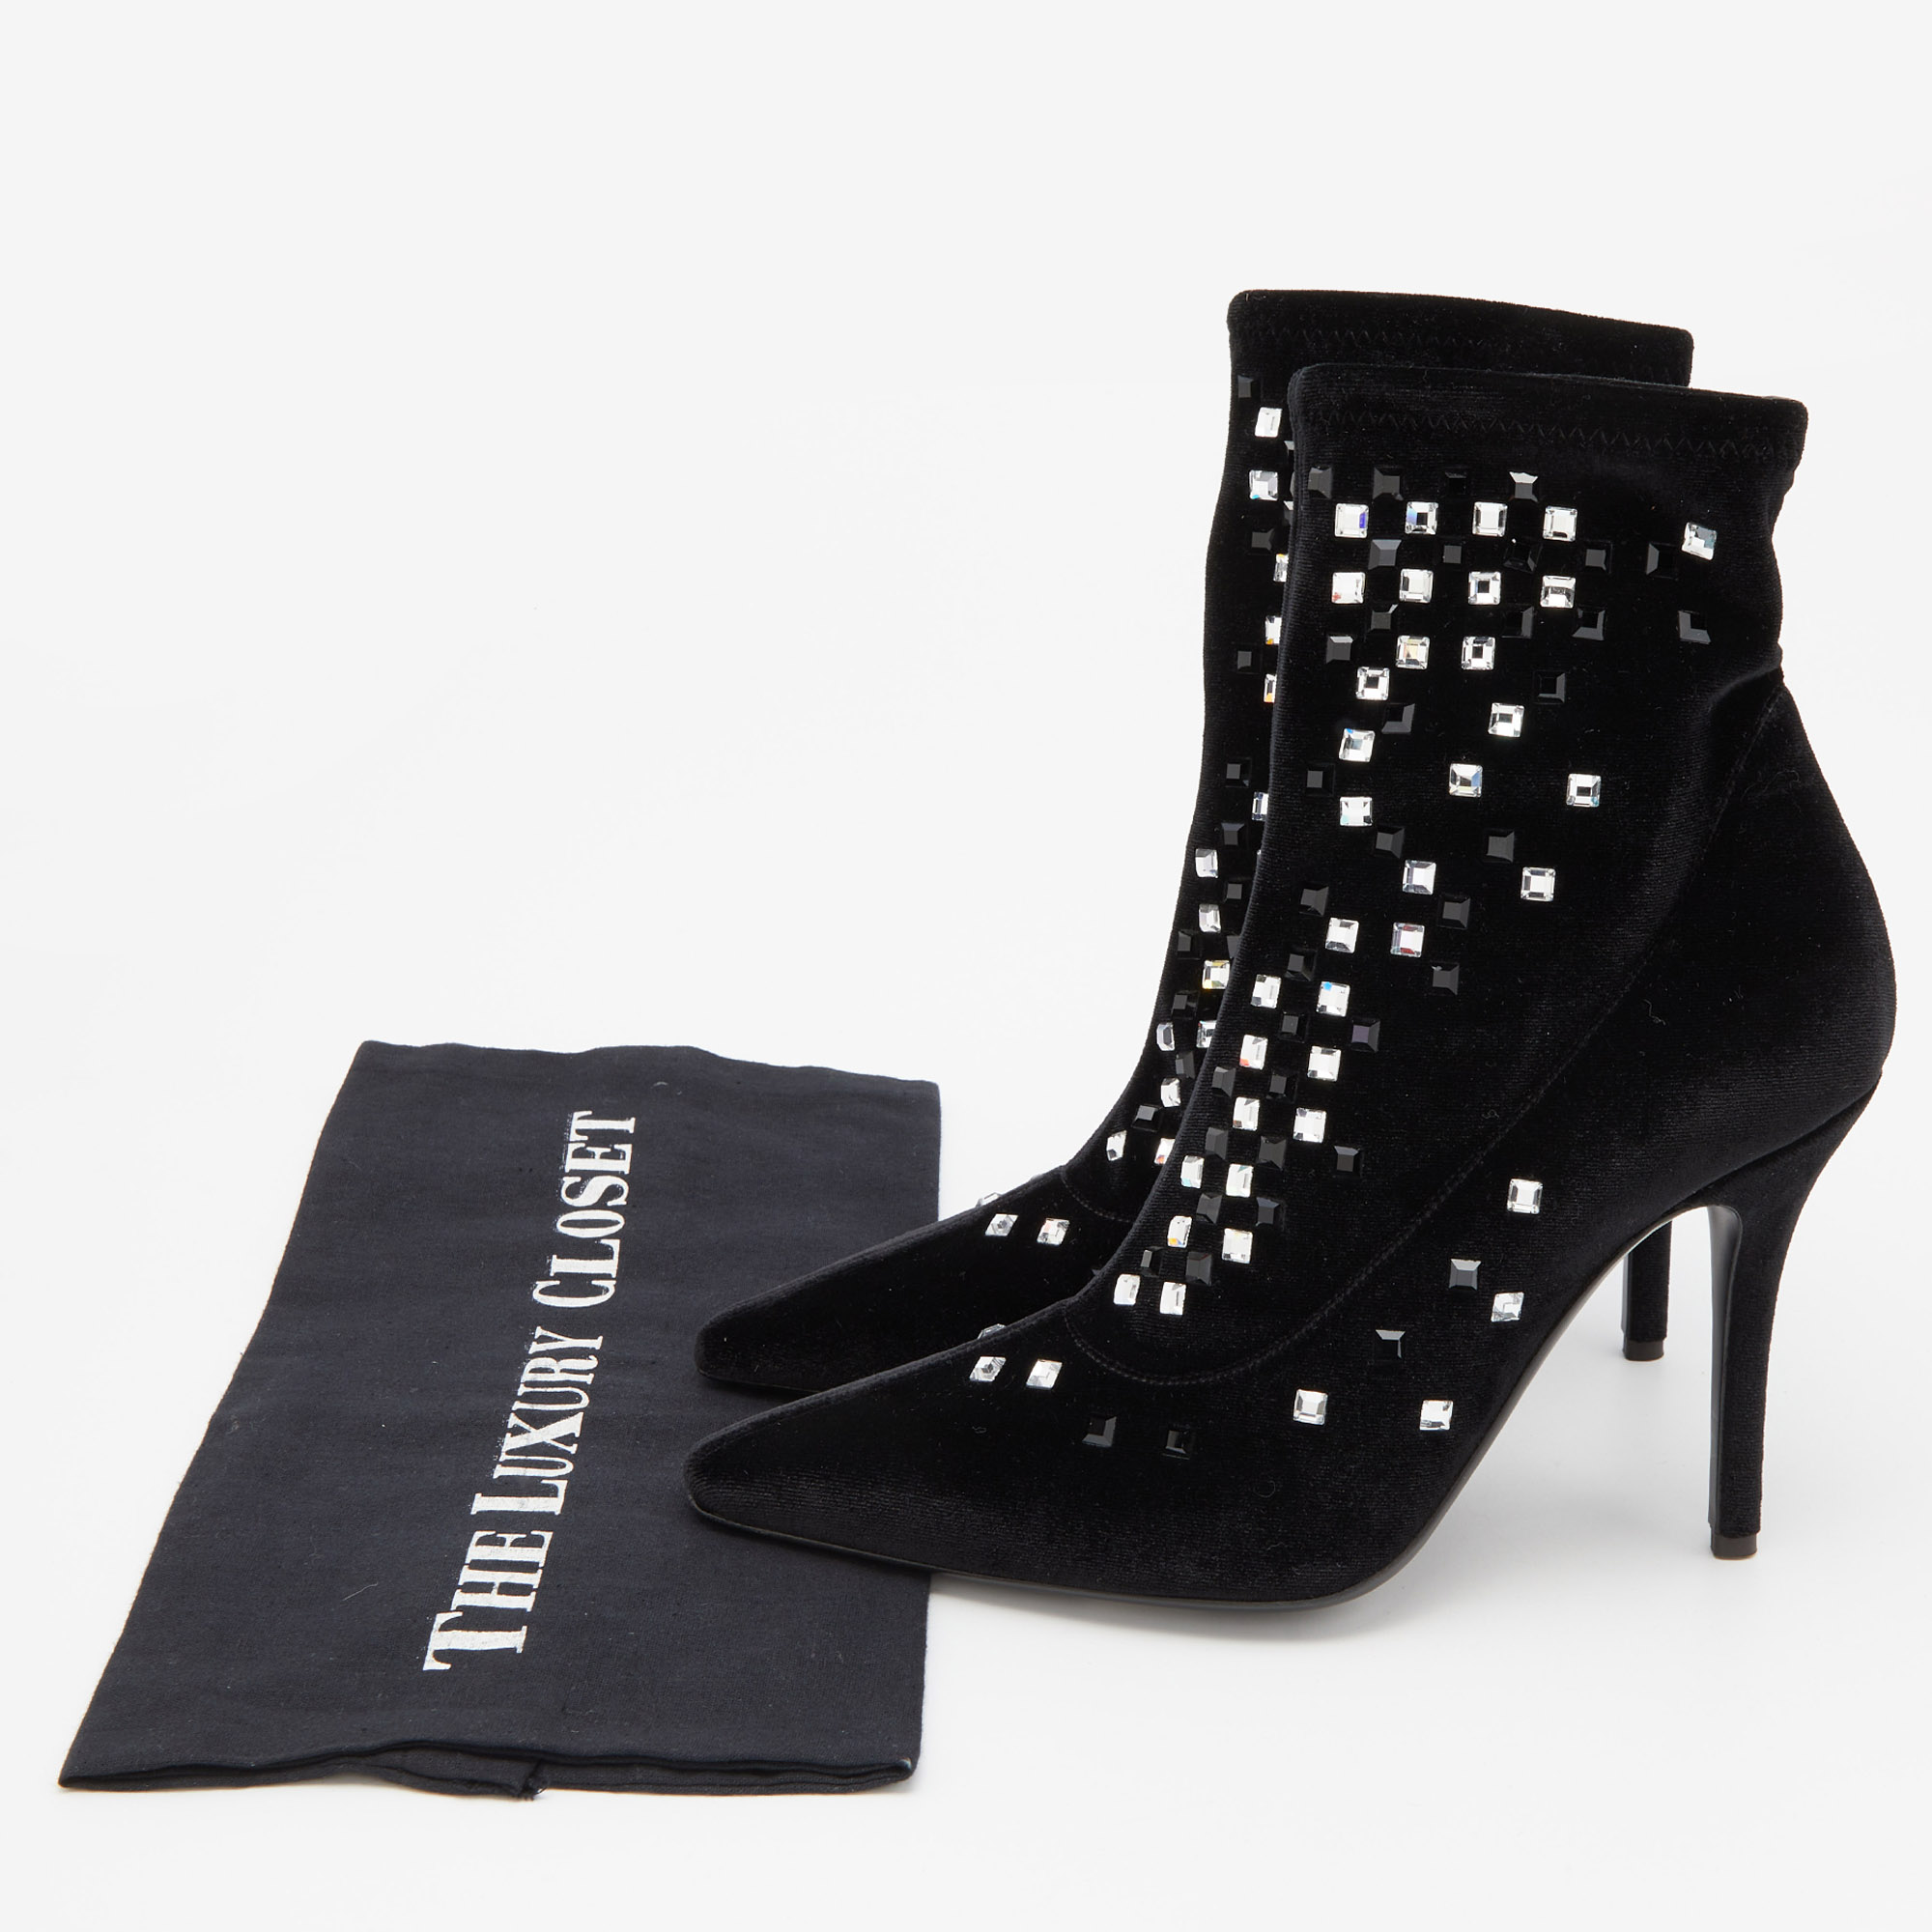 Giuseppe Zanotti Black Velvet Crystal Embellished Ankle Booties Size 38